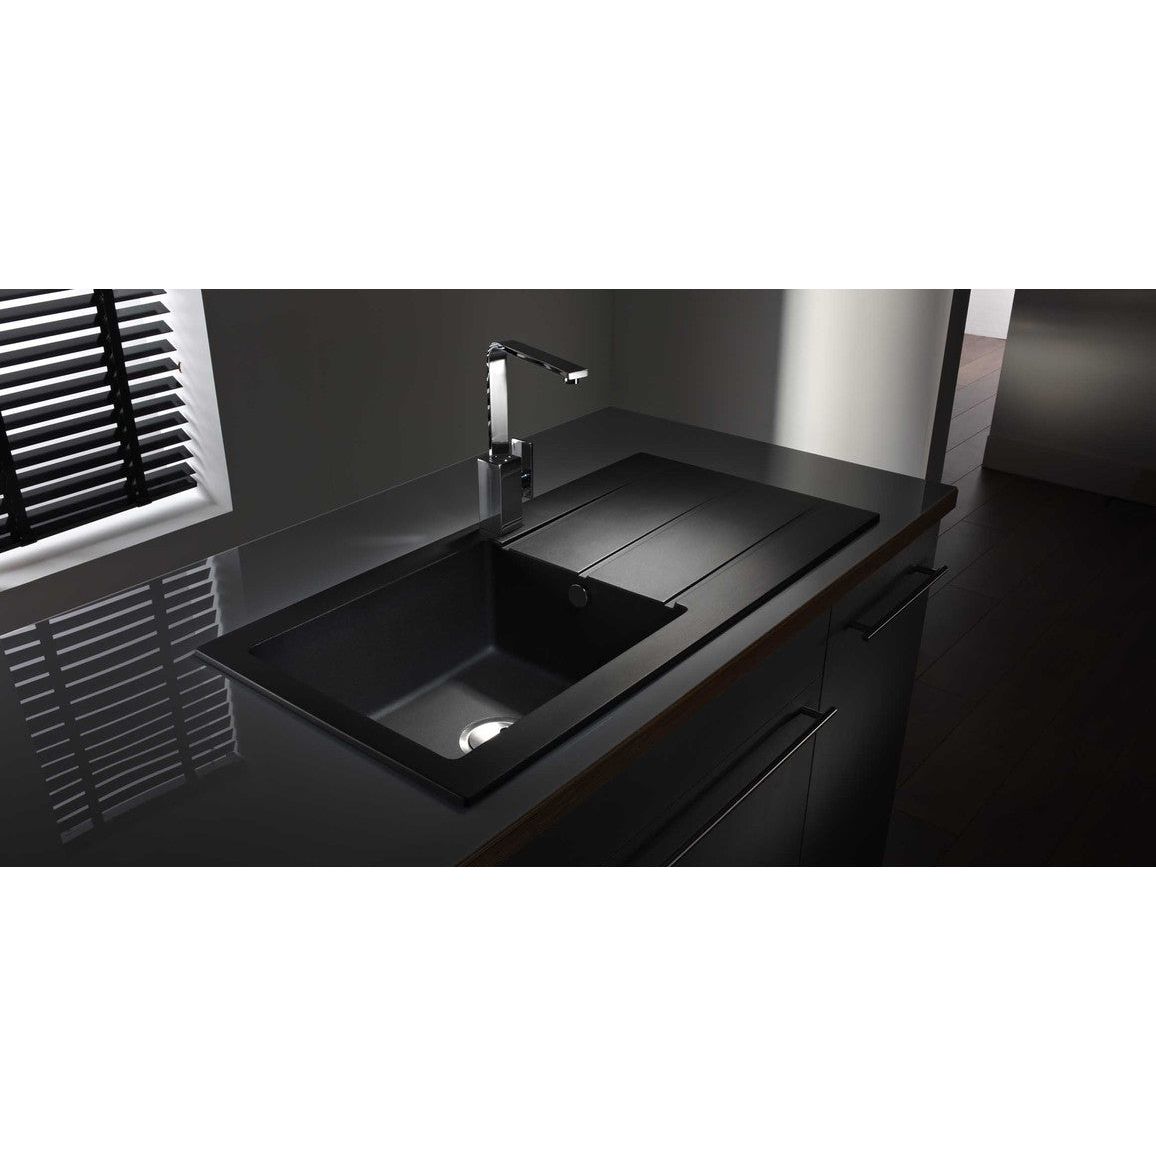 Abode Zero 1B & Drainer Granite Inset Sink - White